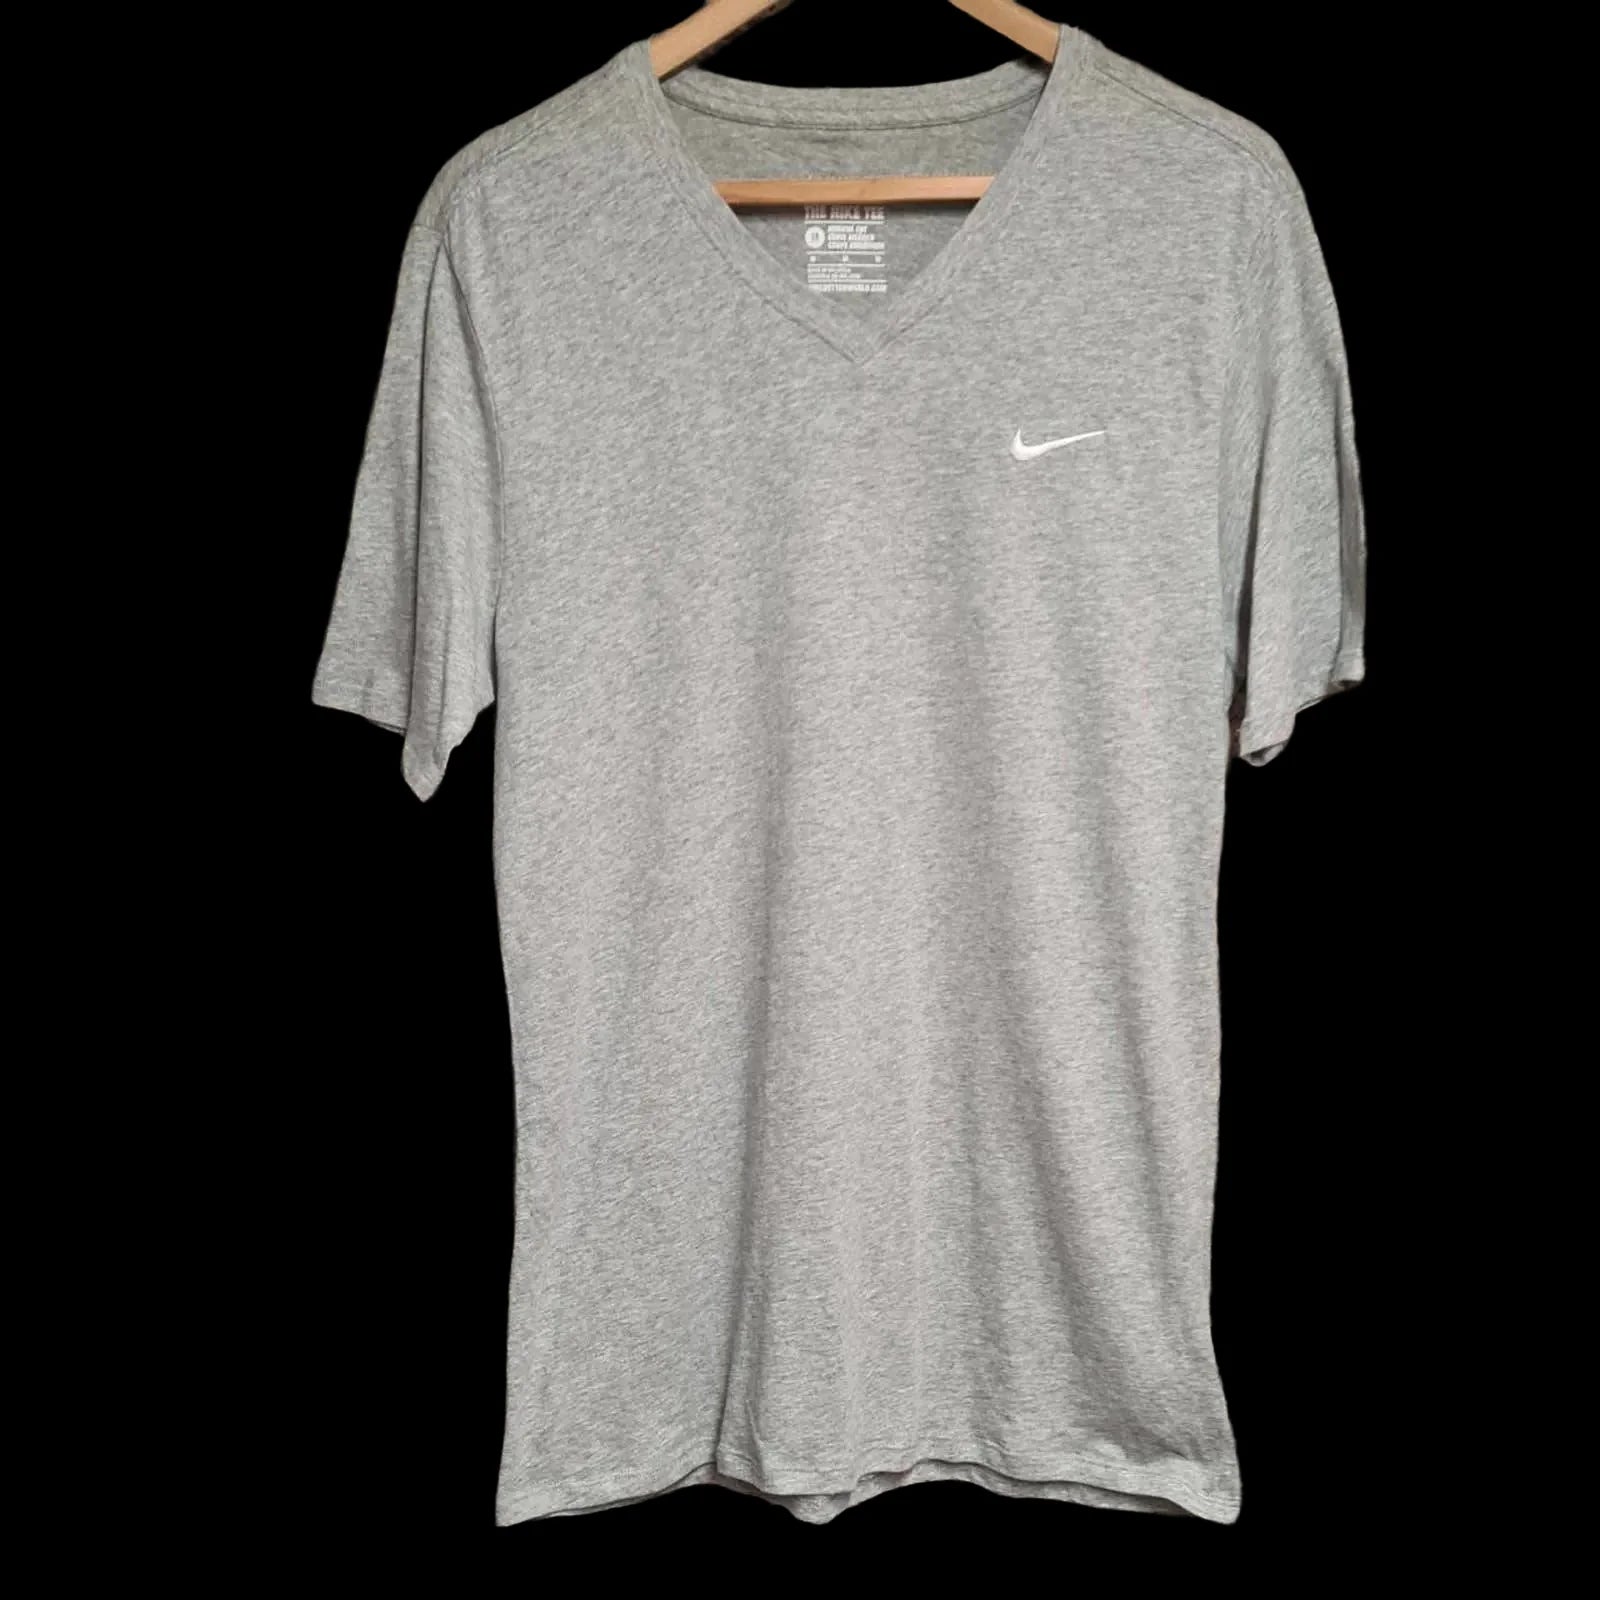 Mens Nike V-neck Grey T-shirt UK Medium - T-Shirts - 1 - 521